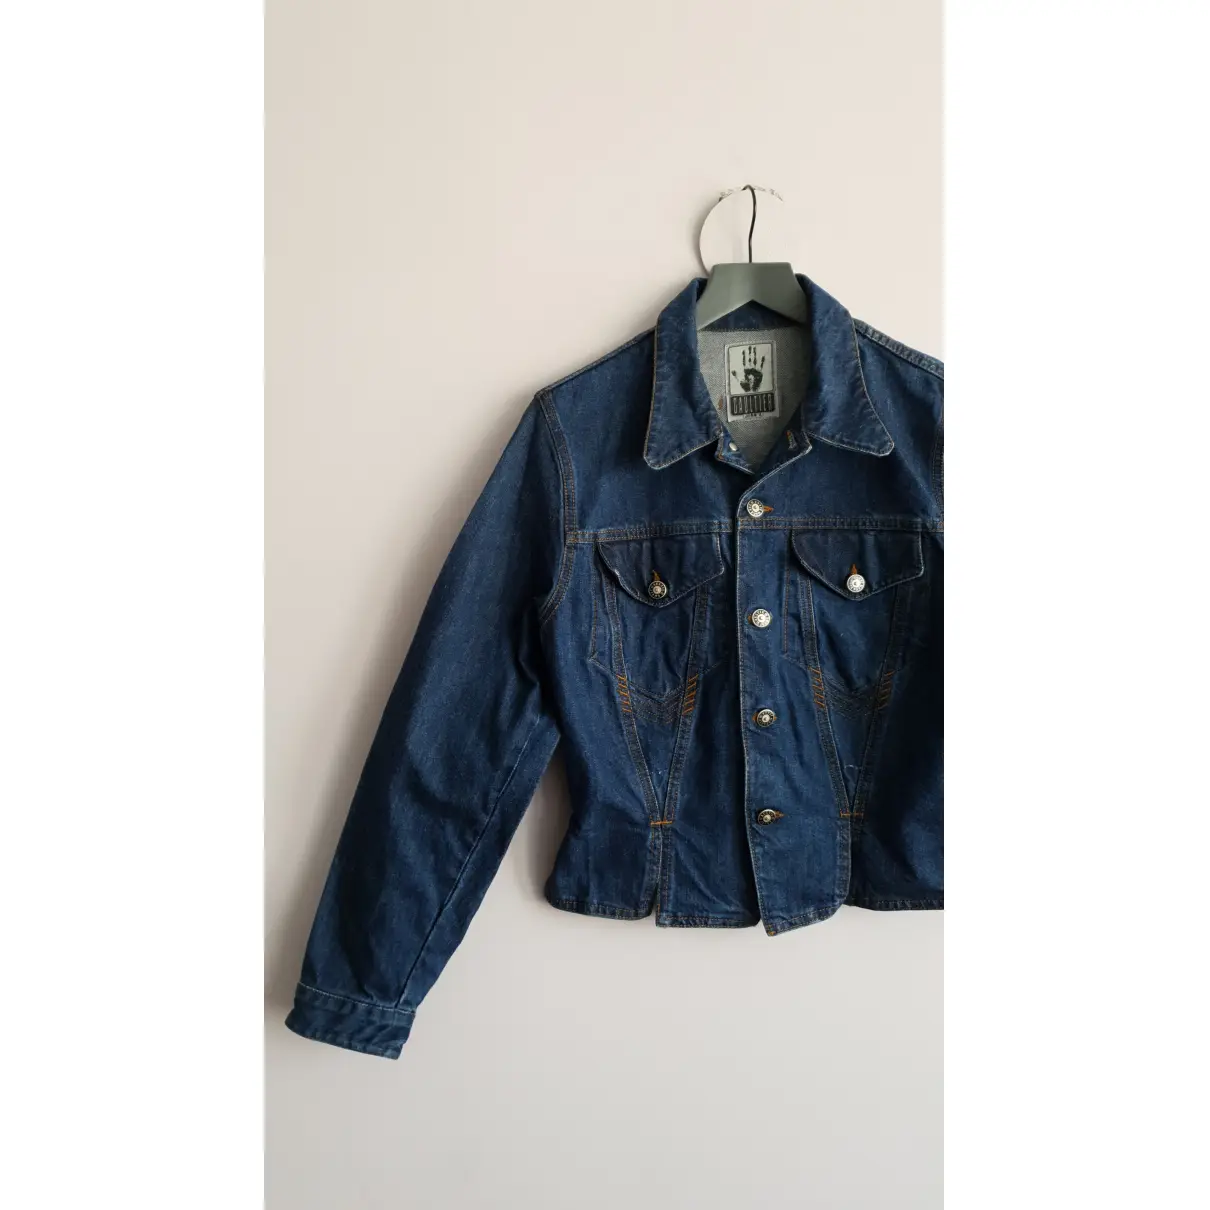 Buy Jean Paul Gaultier Biker jacket online - Vintage